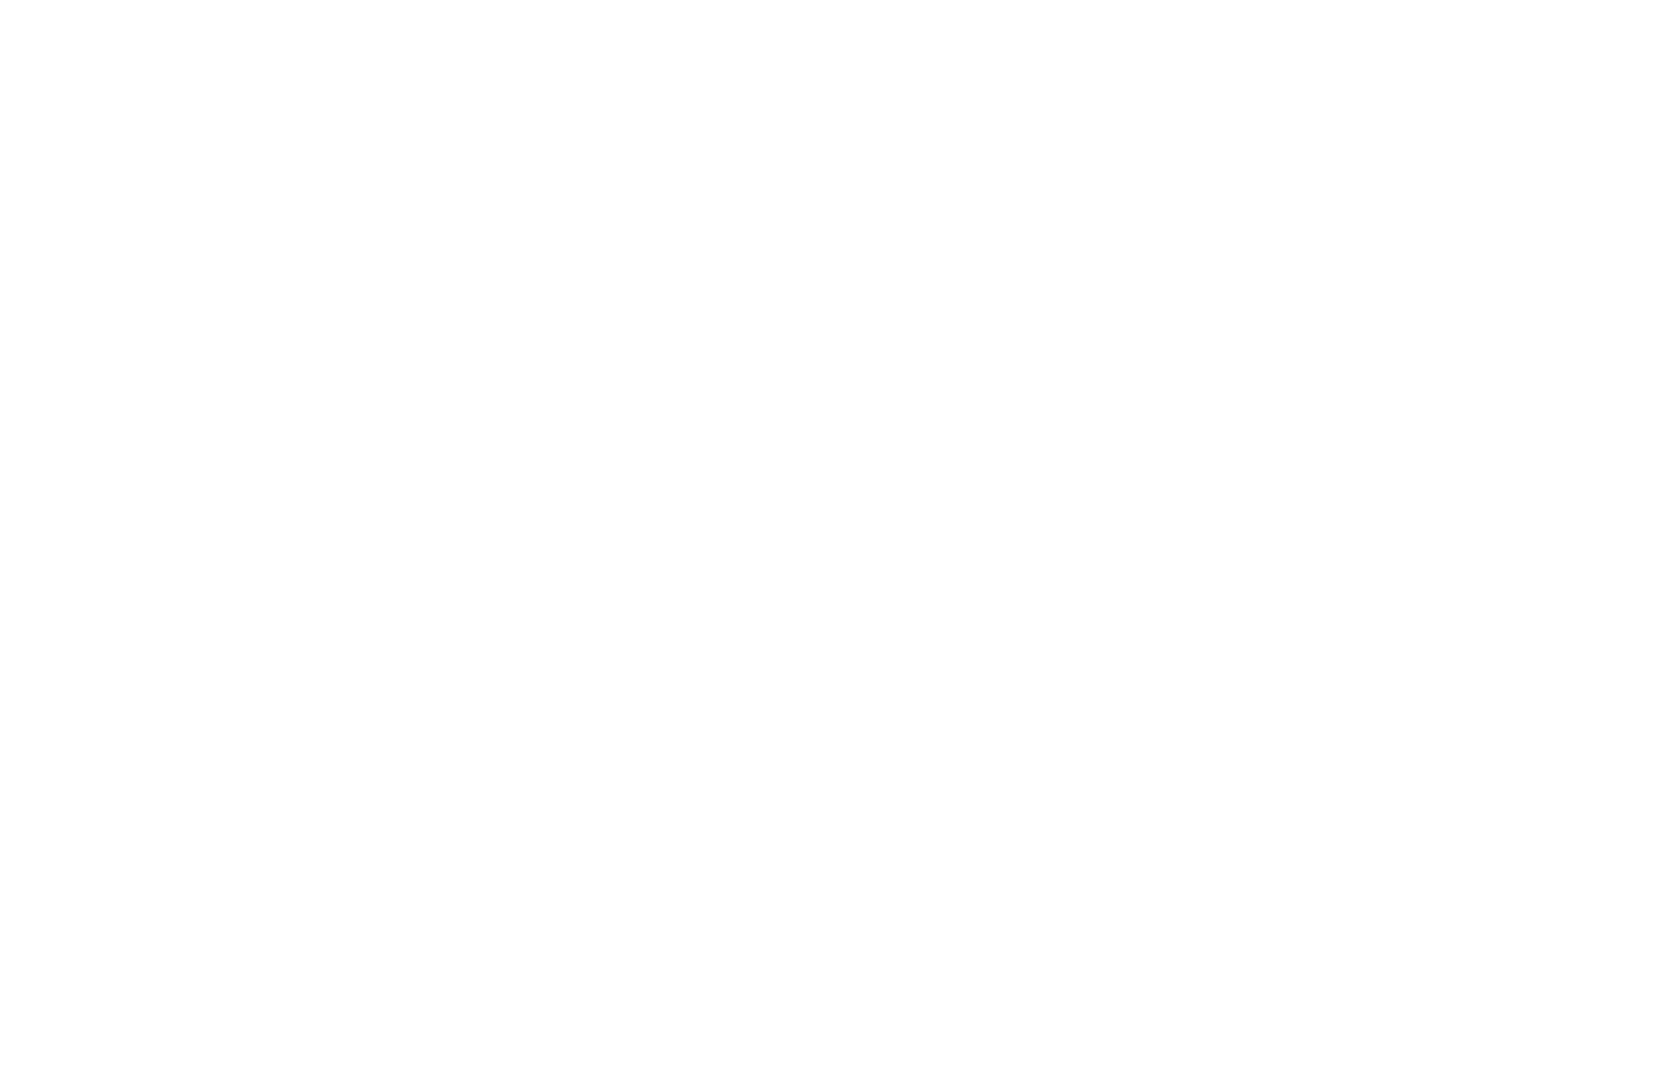 Best Documentary - Branson IFF